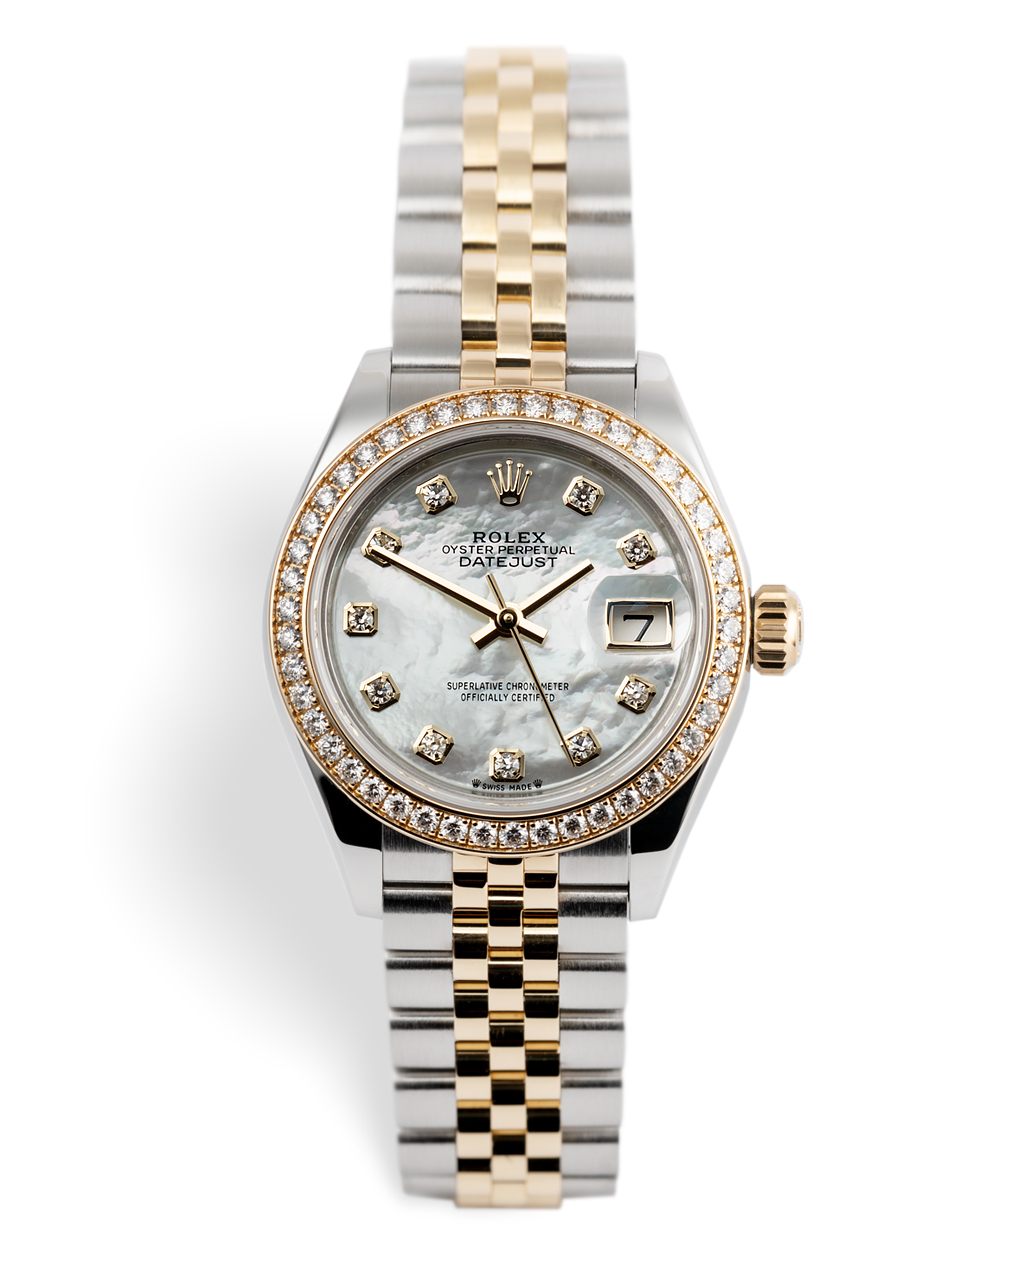 Rolex Lady-Datejust 28 Watches | ref 279383RBR | Rolex Warranty to 2026 ...